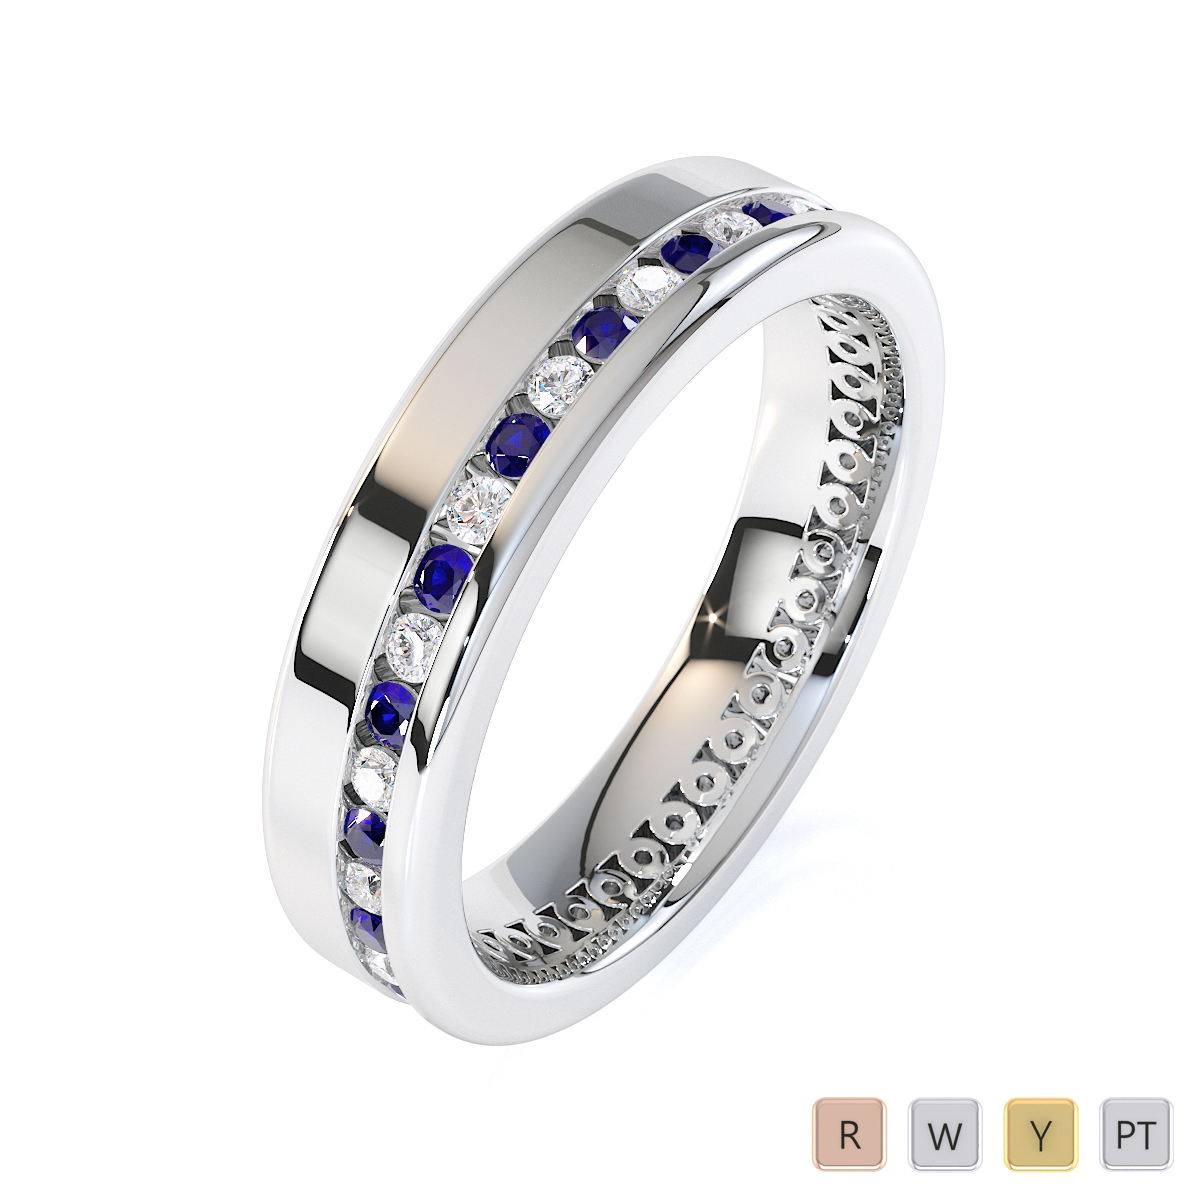 Round Cut Diamond and Blue Sapphire Full Eternity Ring in Gold / Platinum ATZR-0438